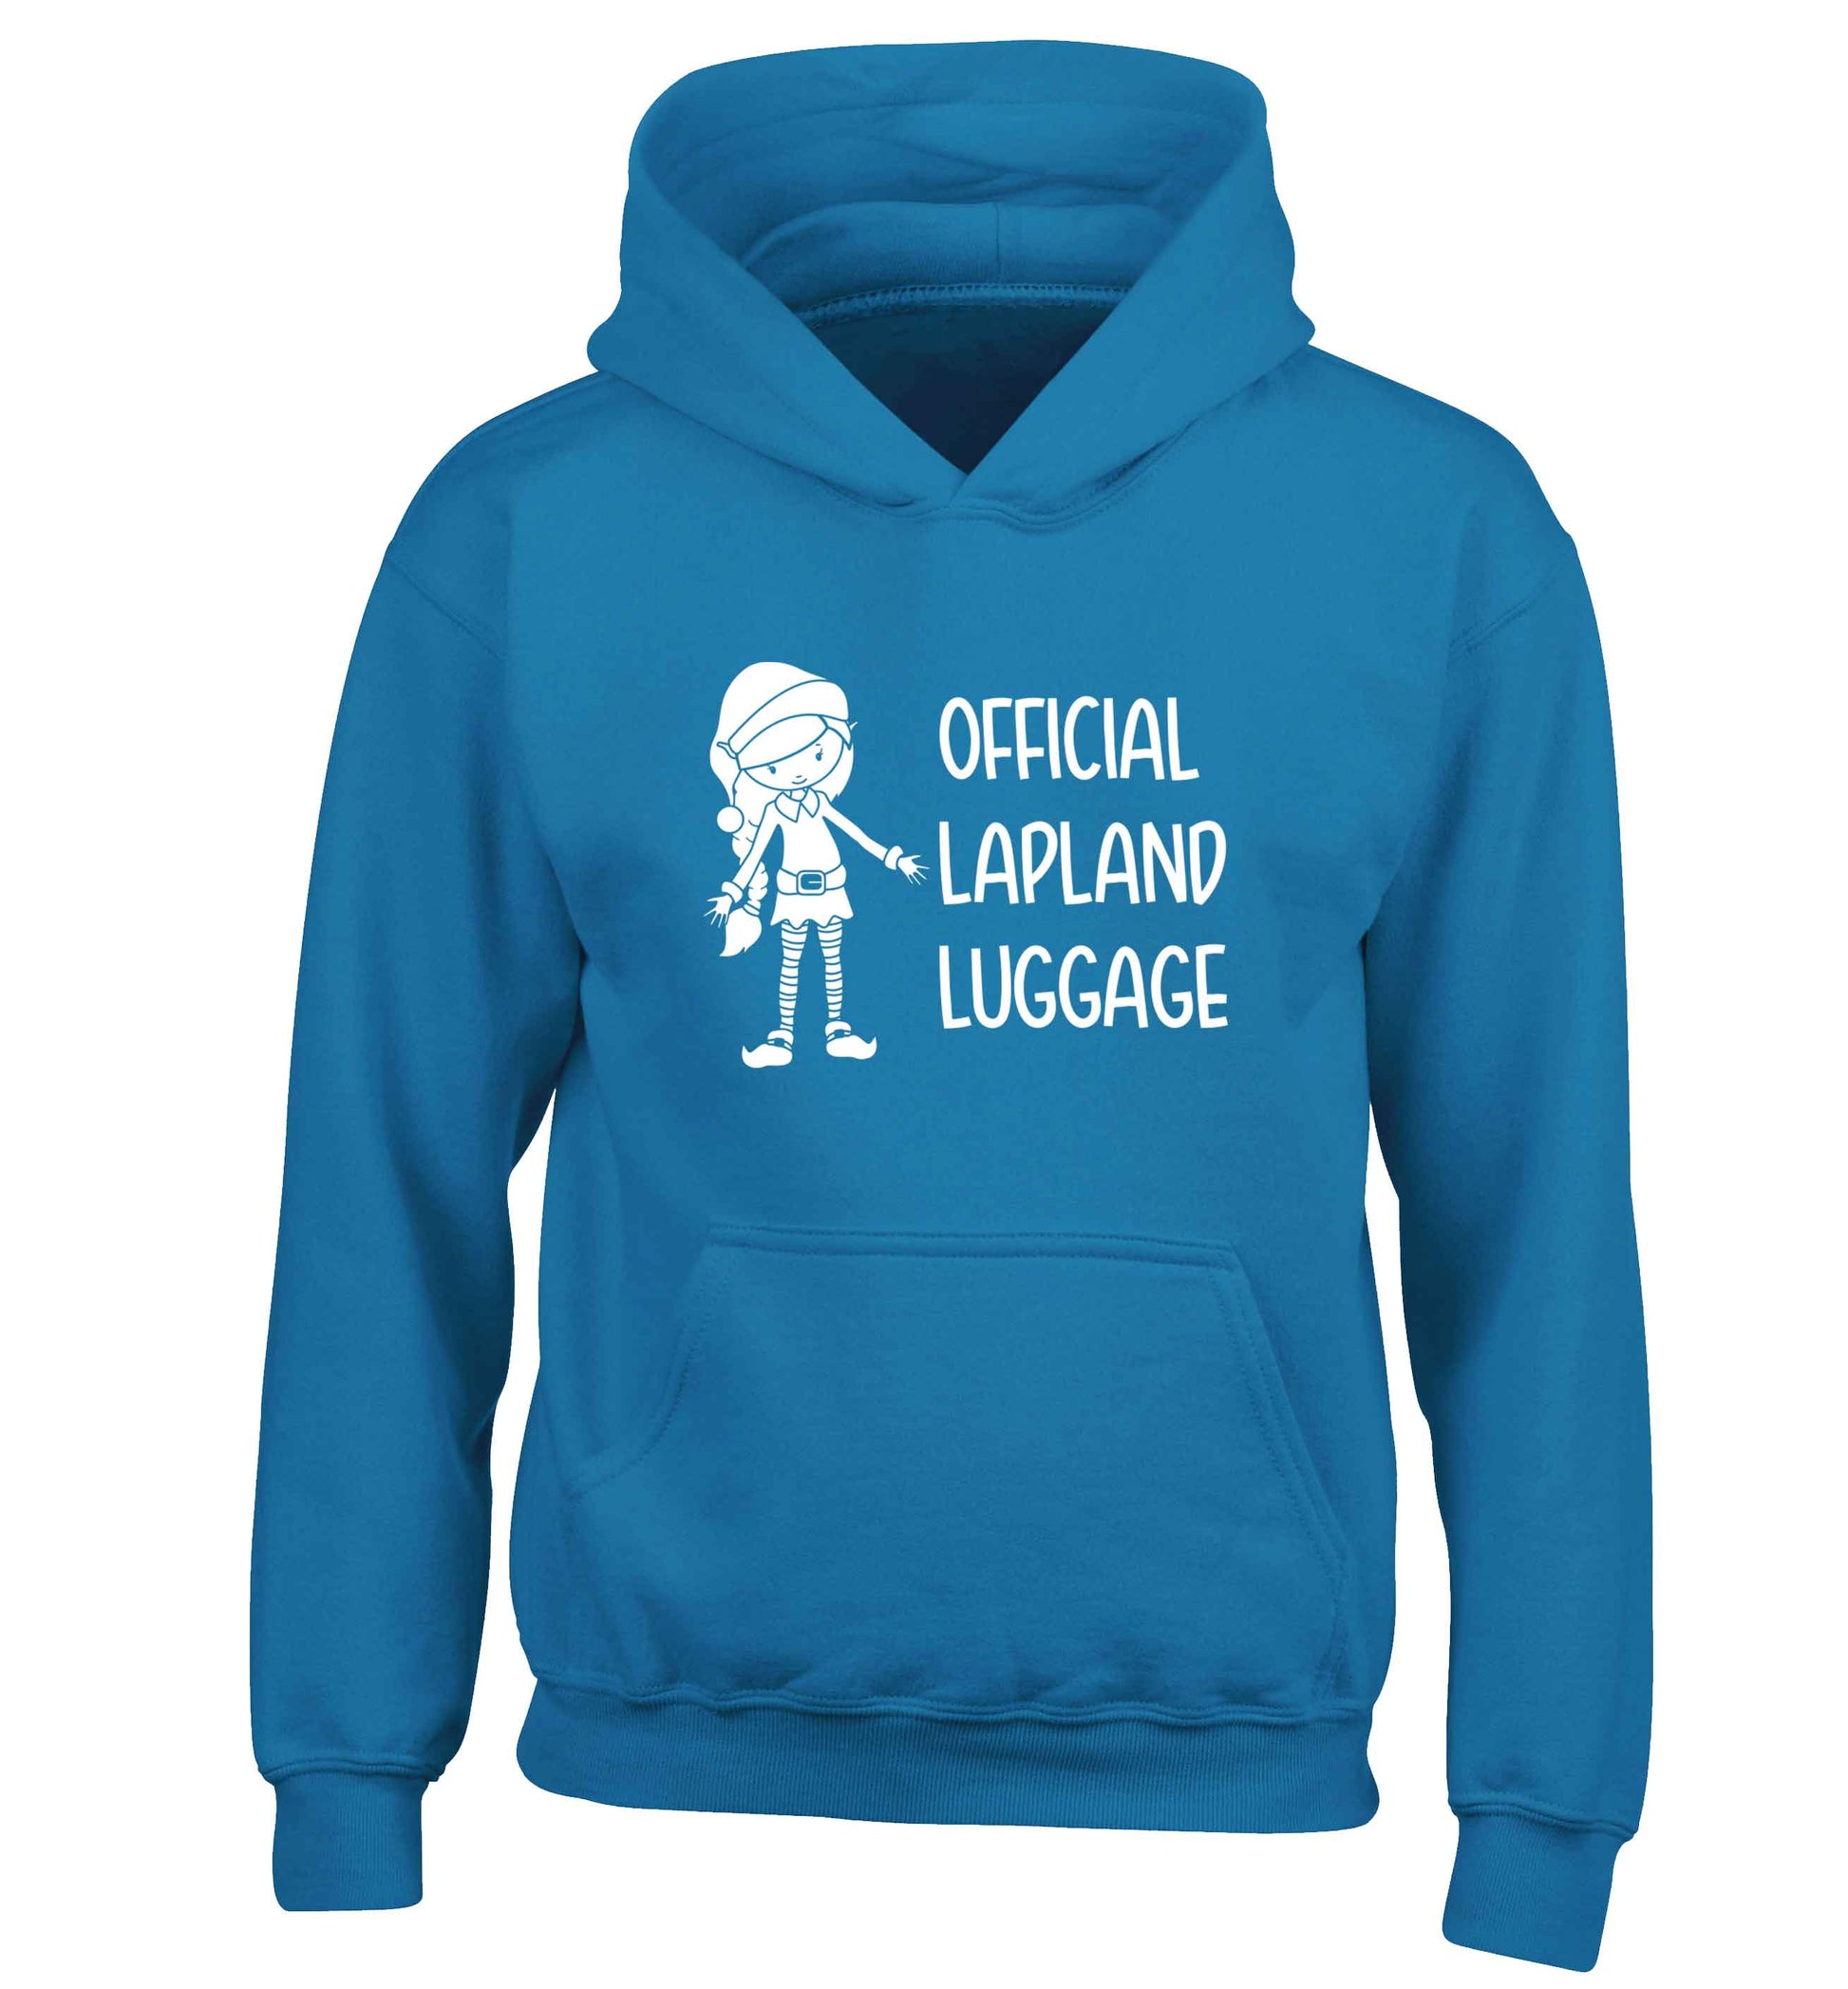 Official lapland luggage - Elf snowflake children's blue hoodie 12-13 Years